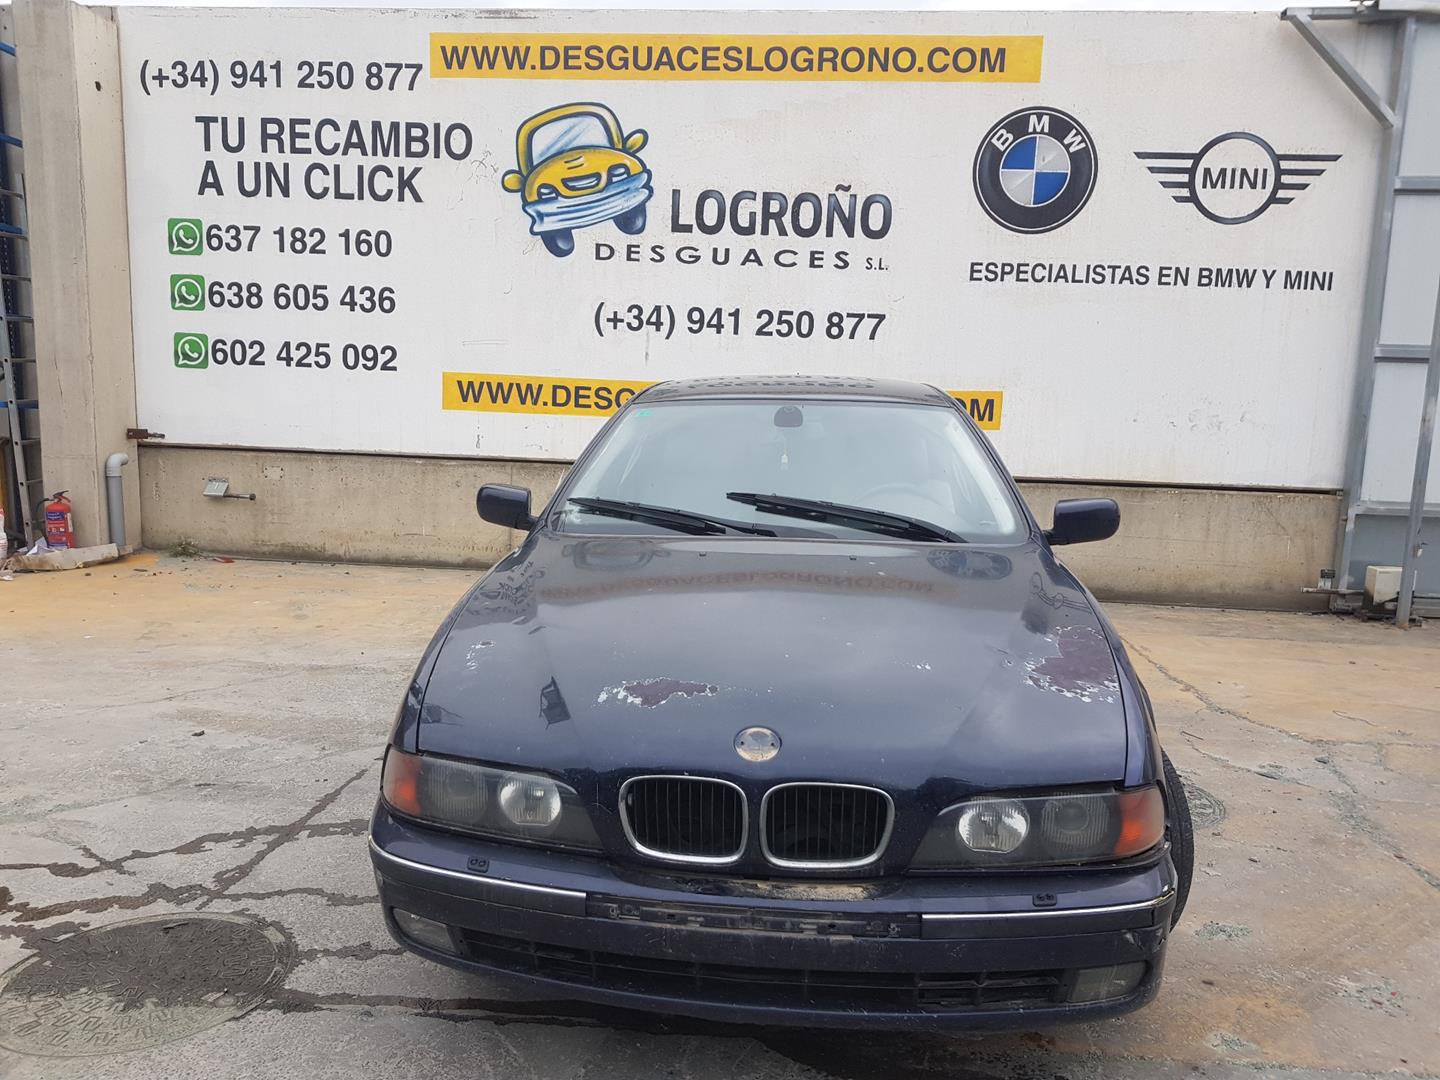 BMW 5 Series E39 (1995-2004) Front Left Fender 41358162133, 41358162133, COLORAZULOSCURO 19808926